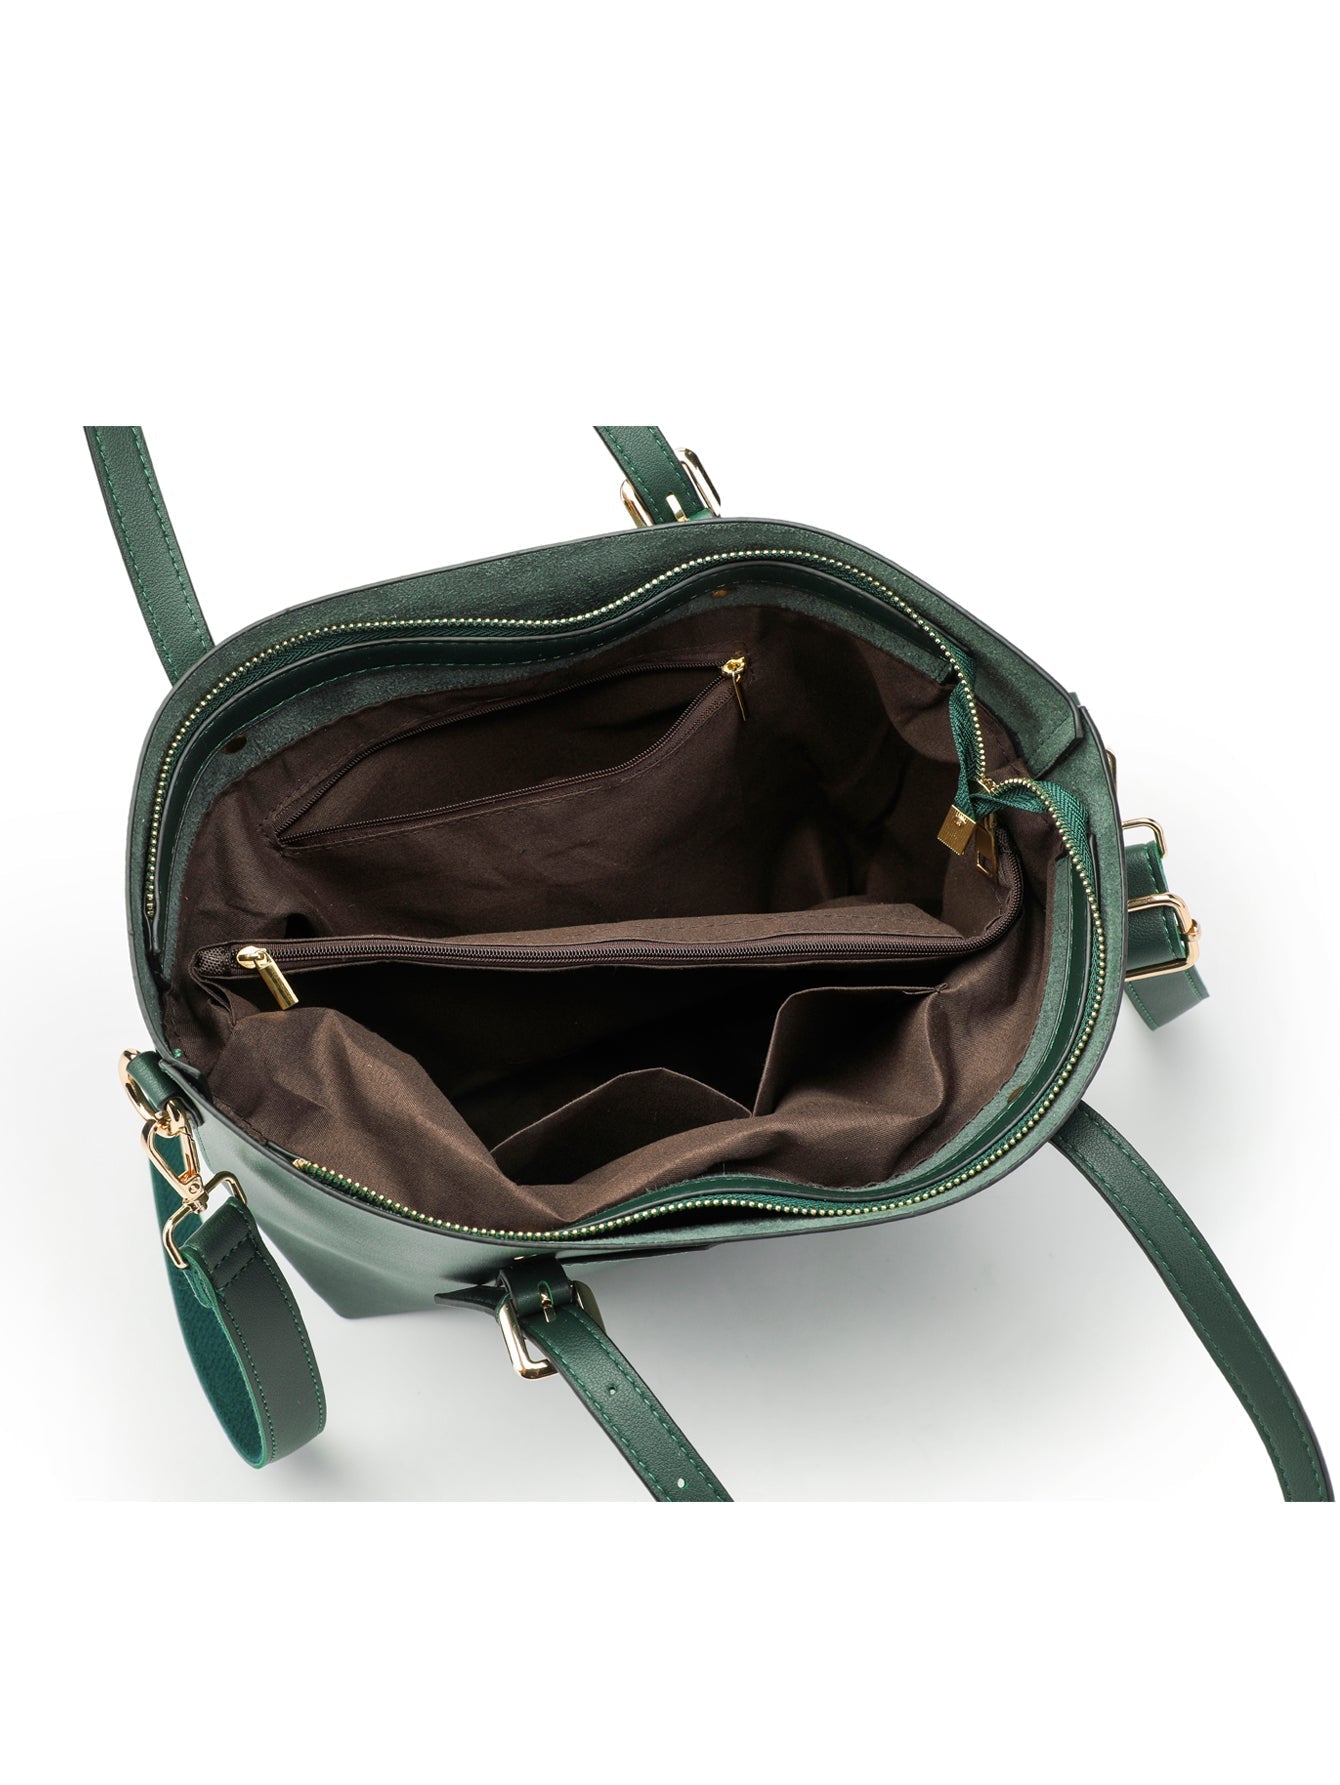 Womens Leather Purses and Handbags Top Handle Satchel Bags Tote Bags Tote Purses Sai Feel